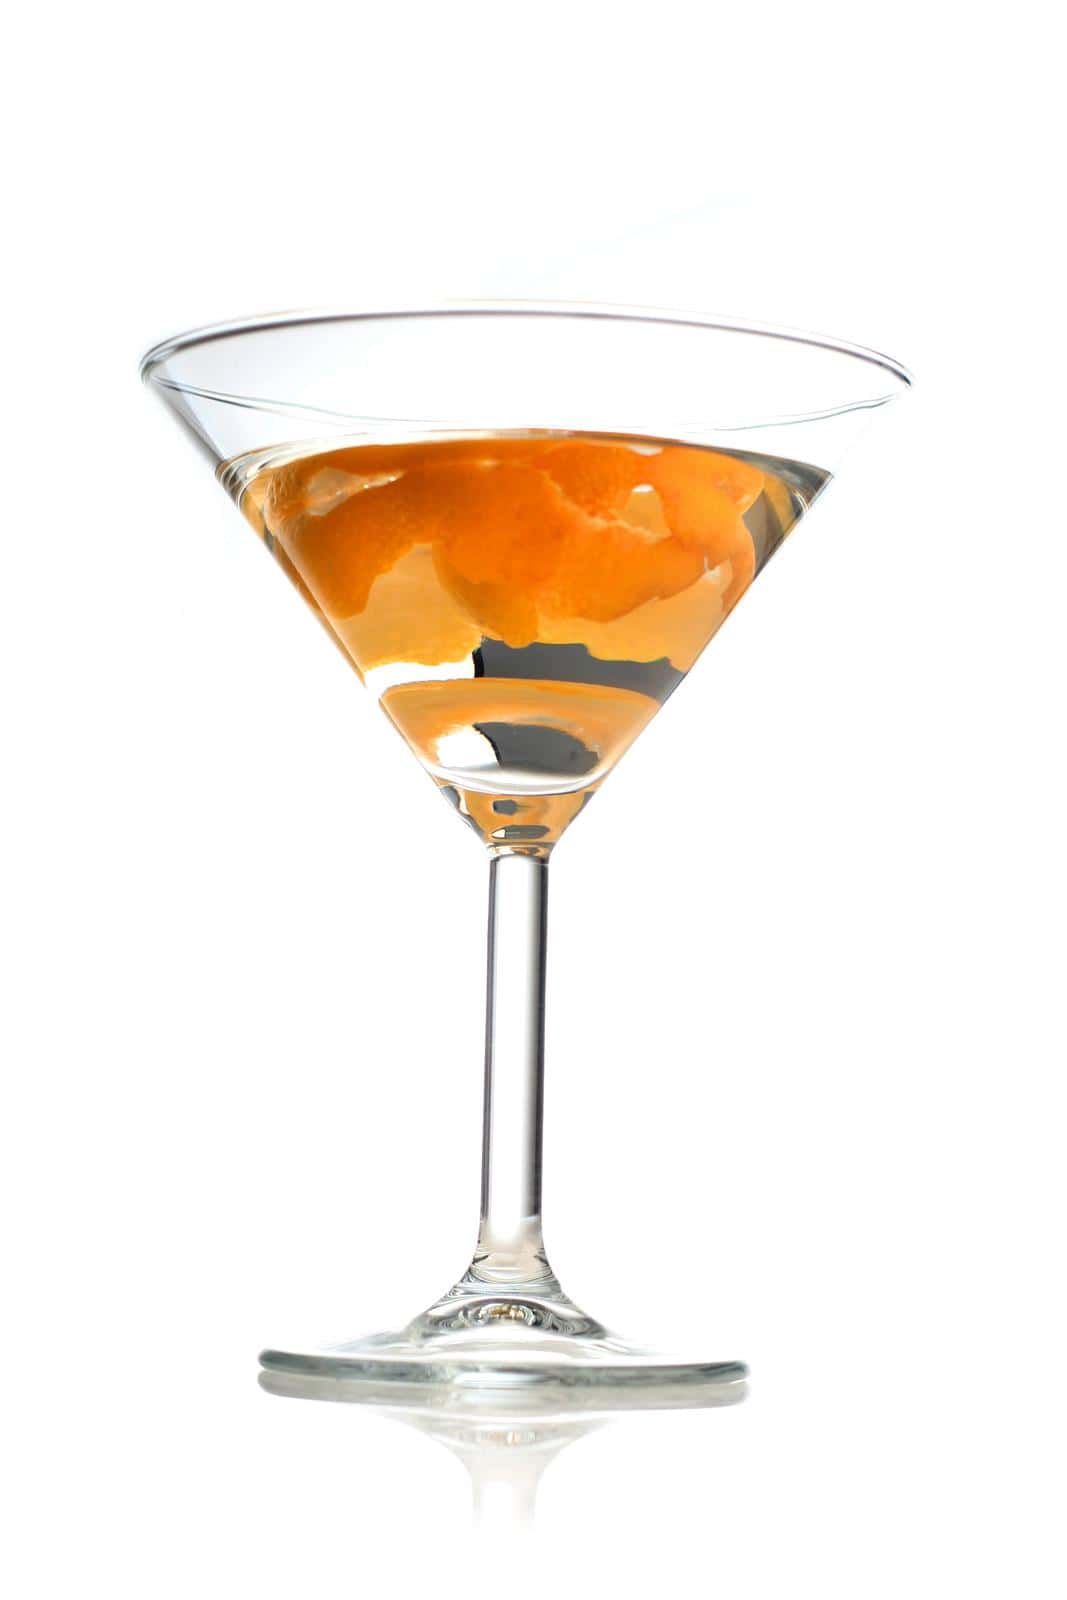 Dixie Whiskey cocktail